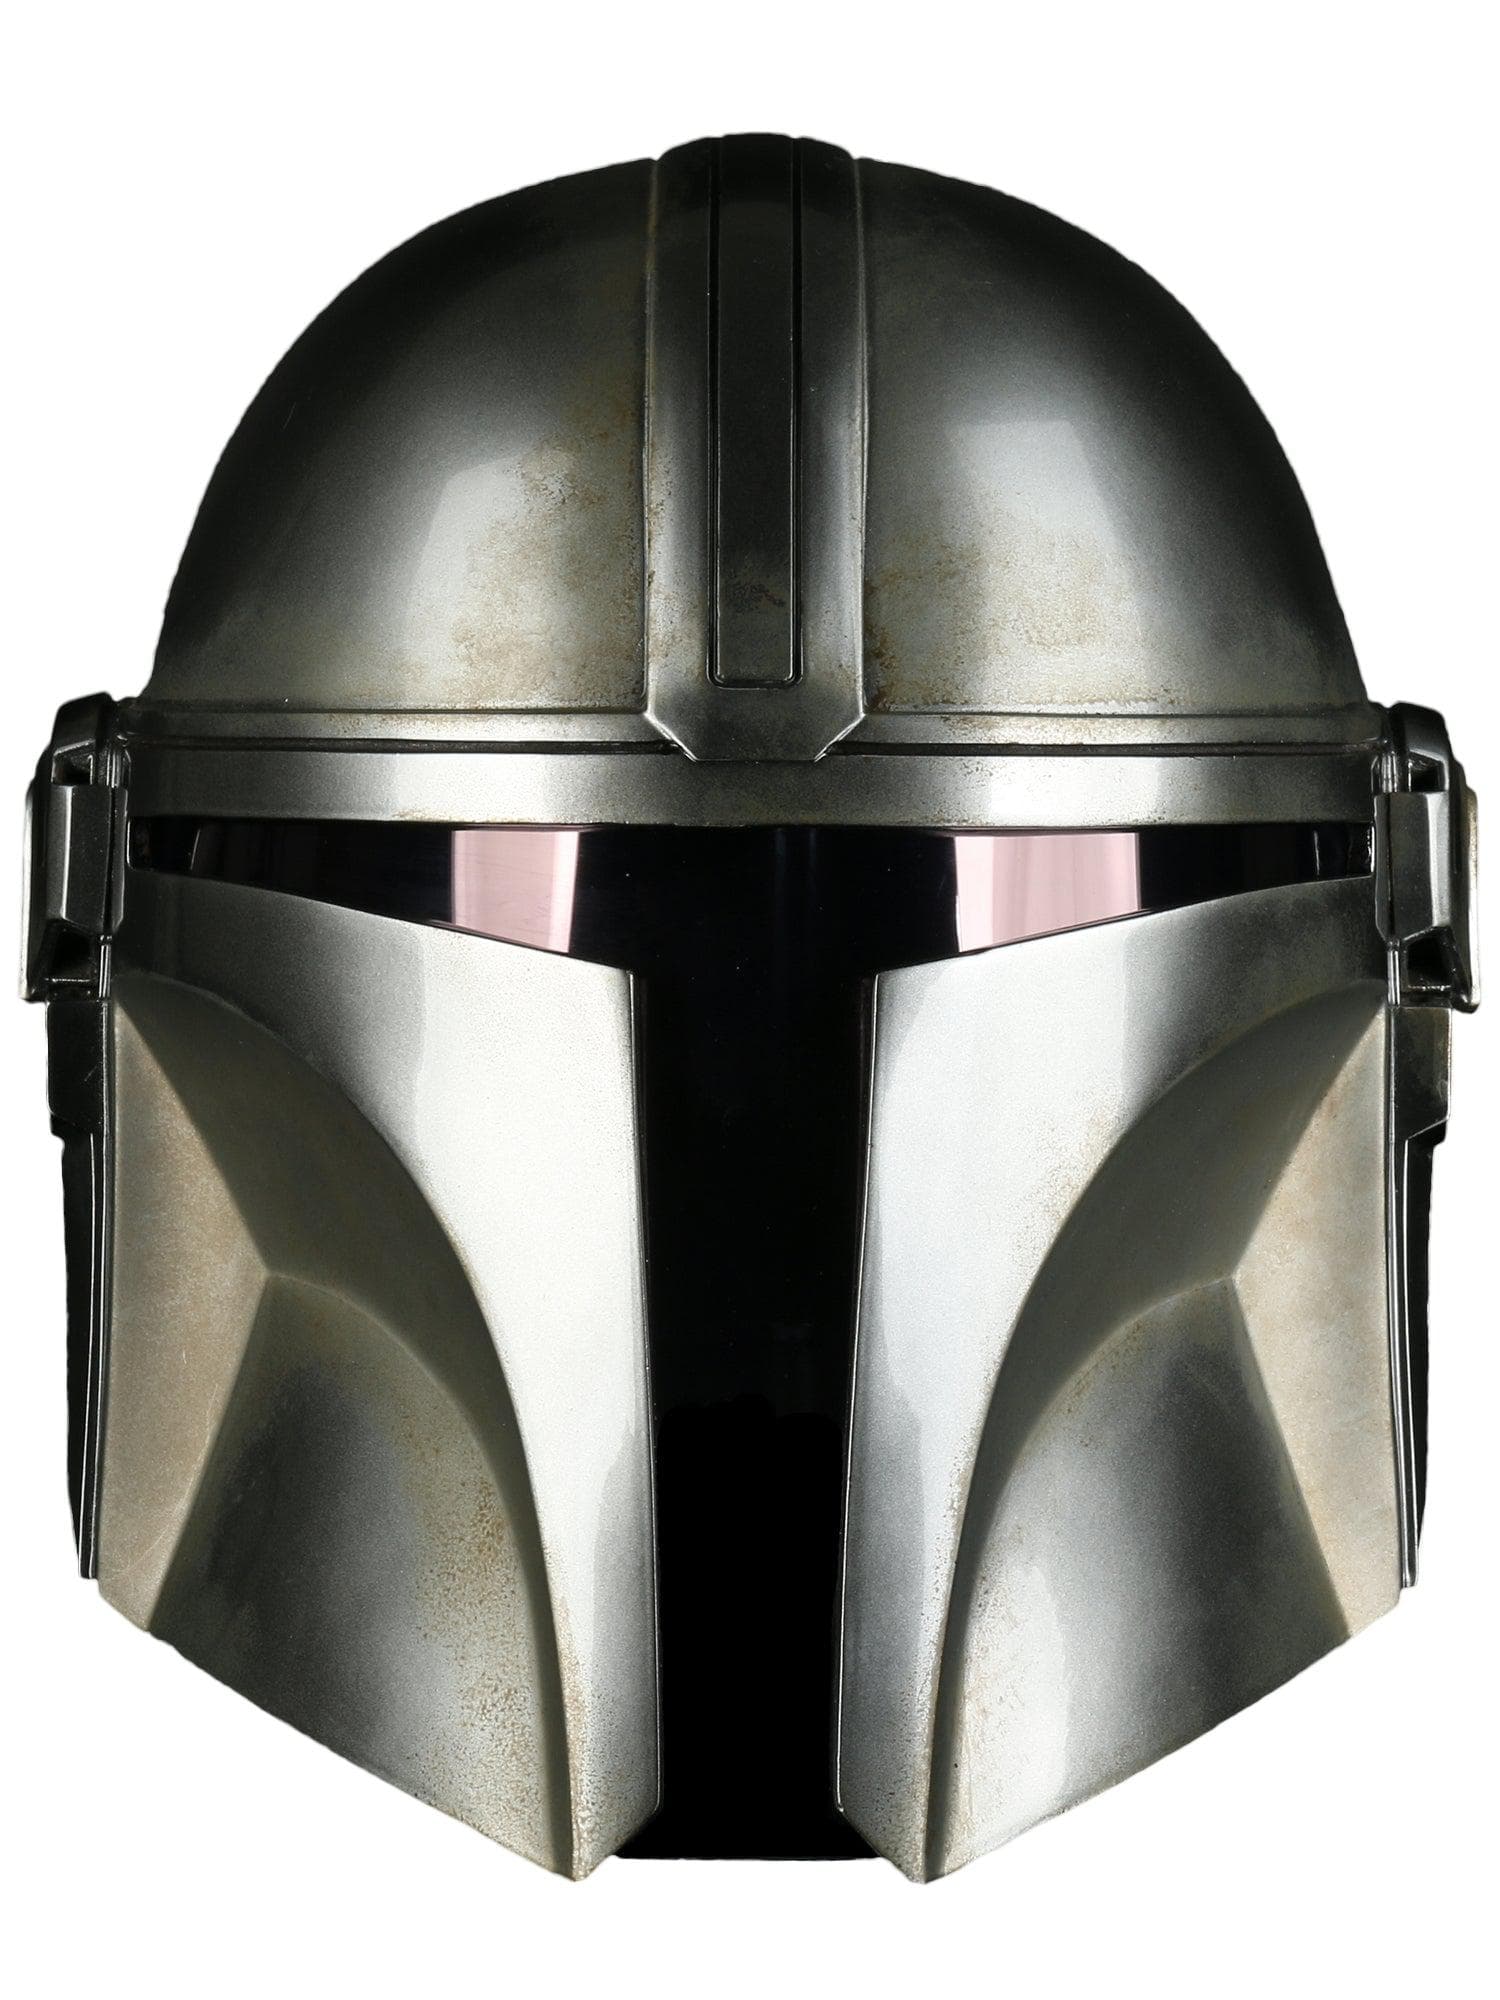 Denuo Novo Star Wars The Mandalorian Helmet Accessory - costumes.com